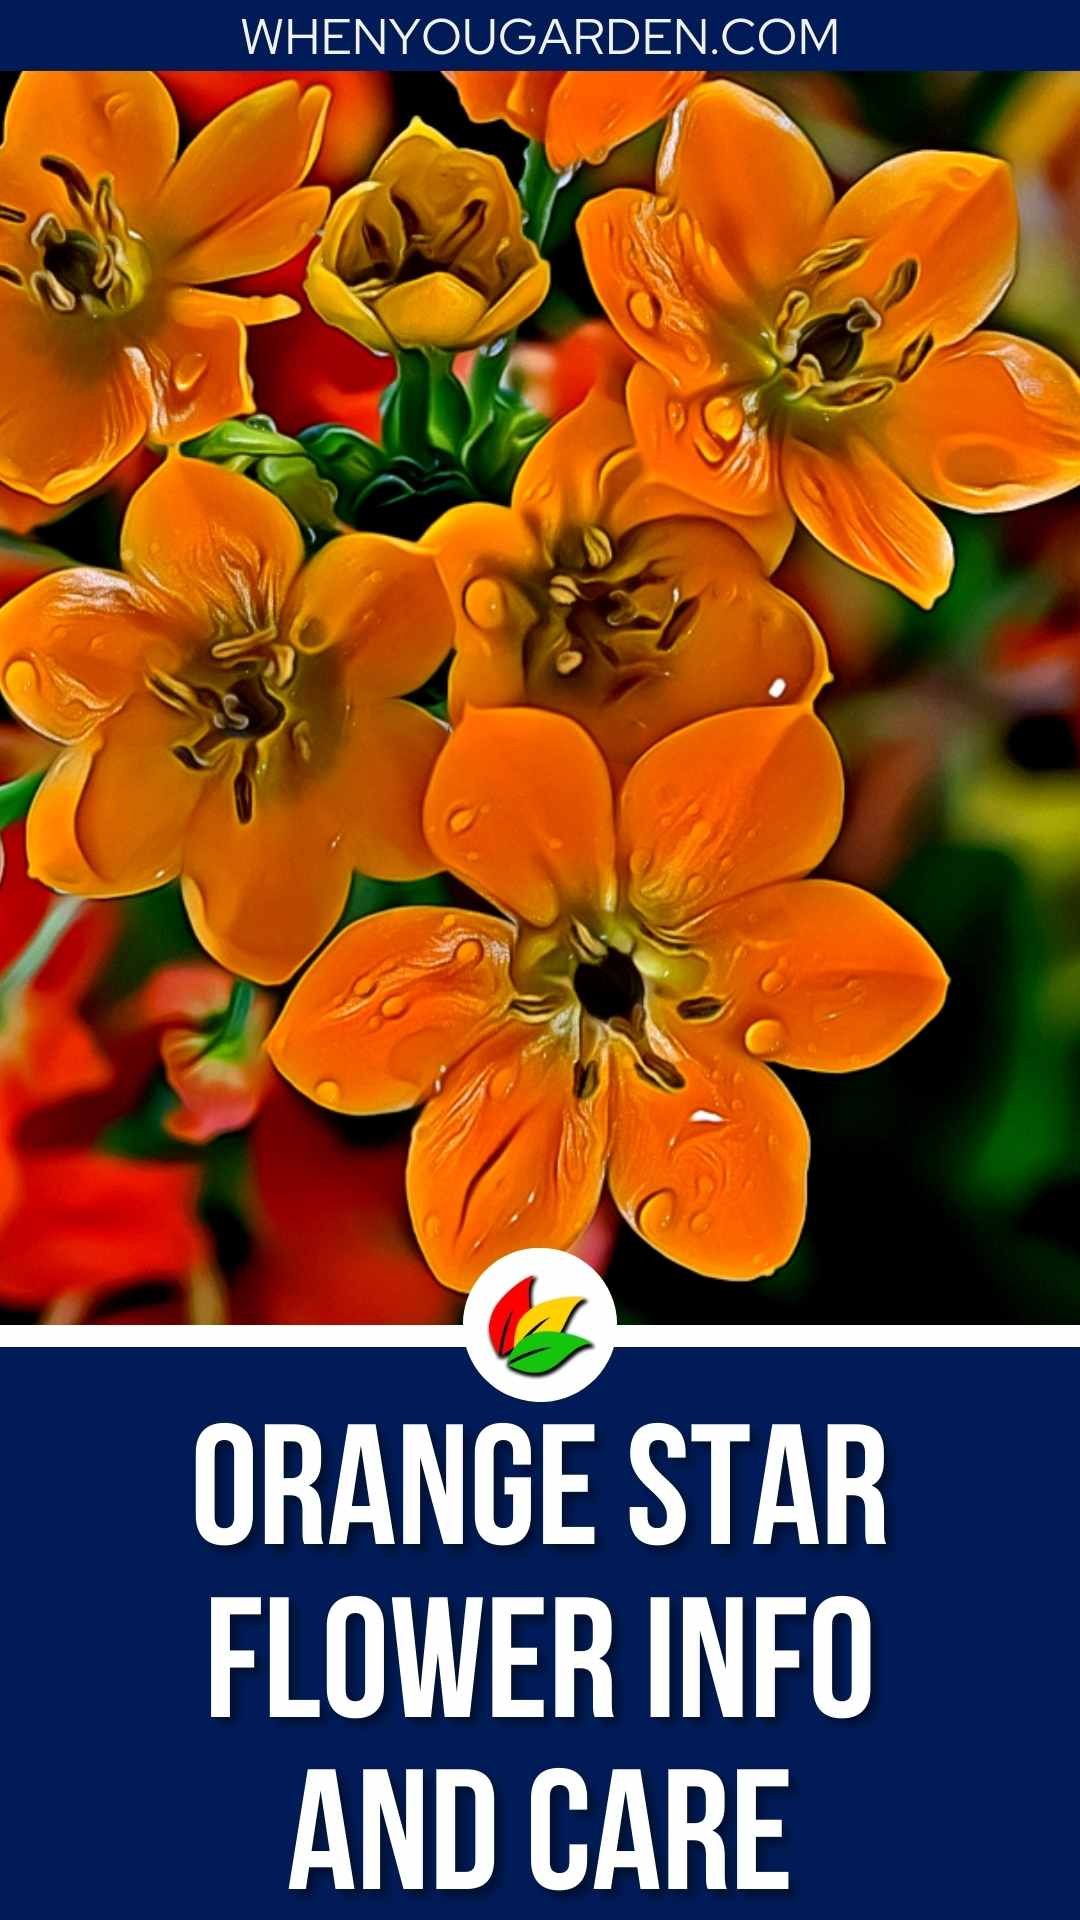 Orange Star Flower: Info and Care